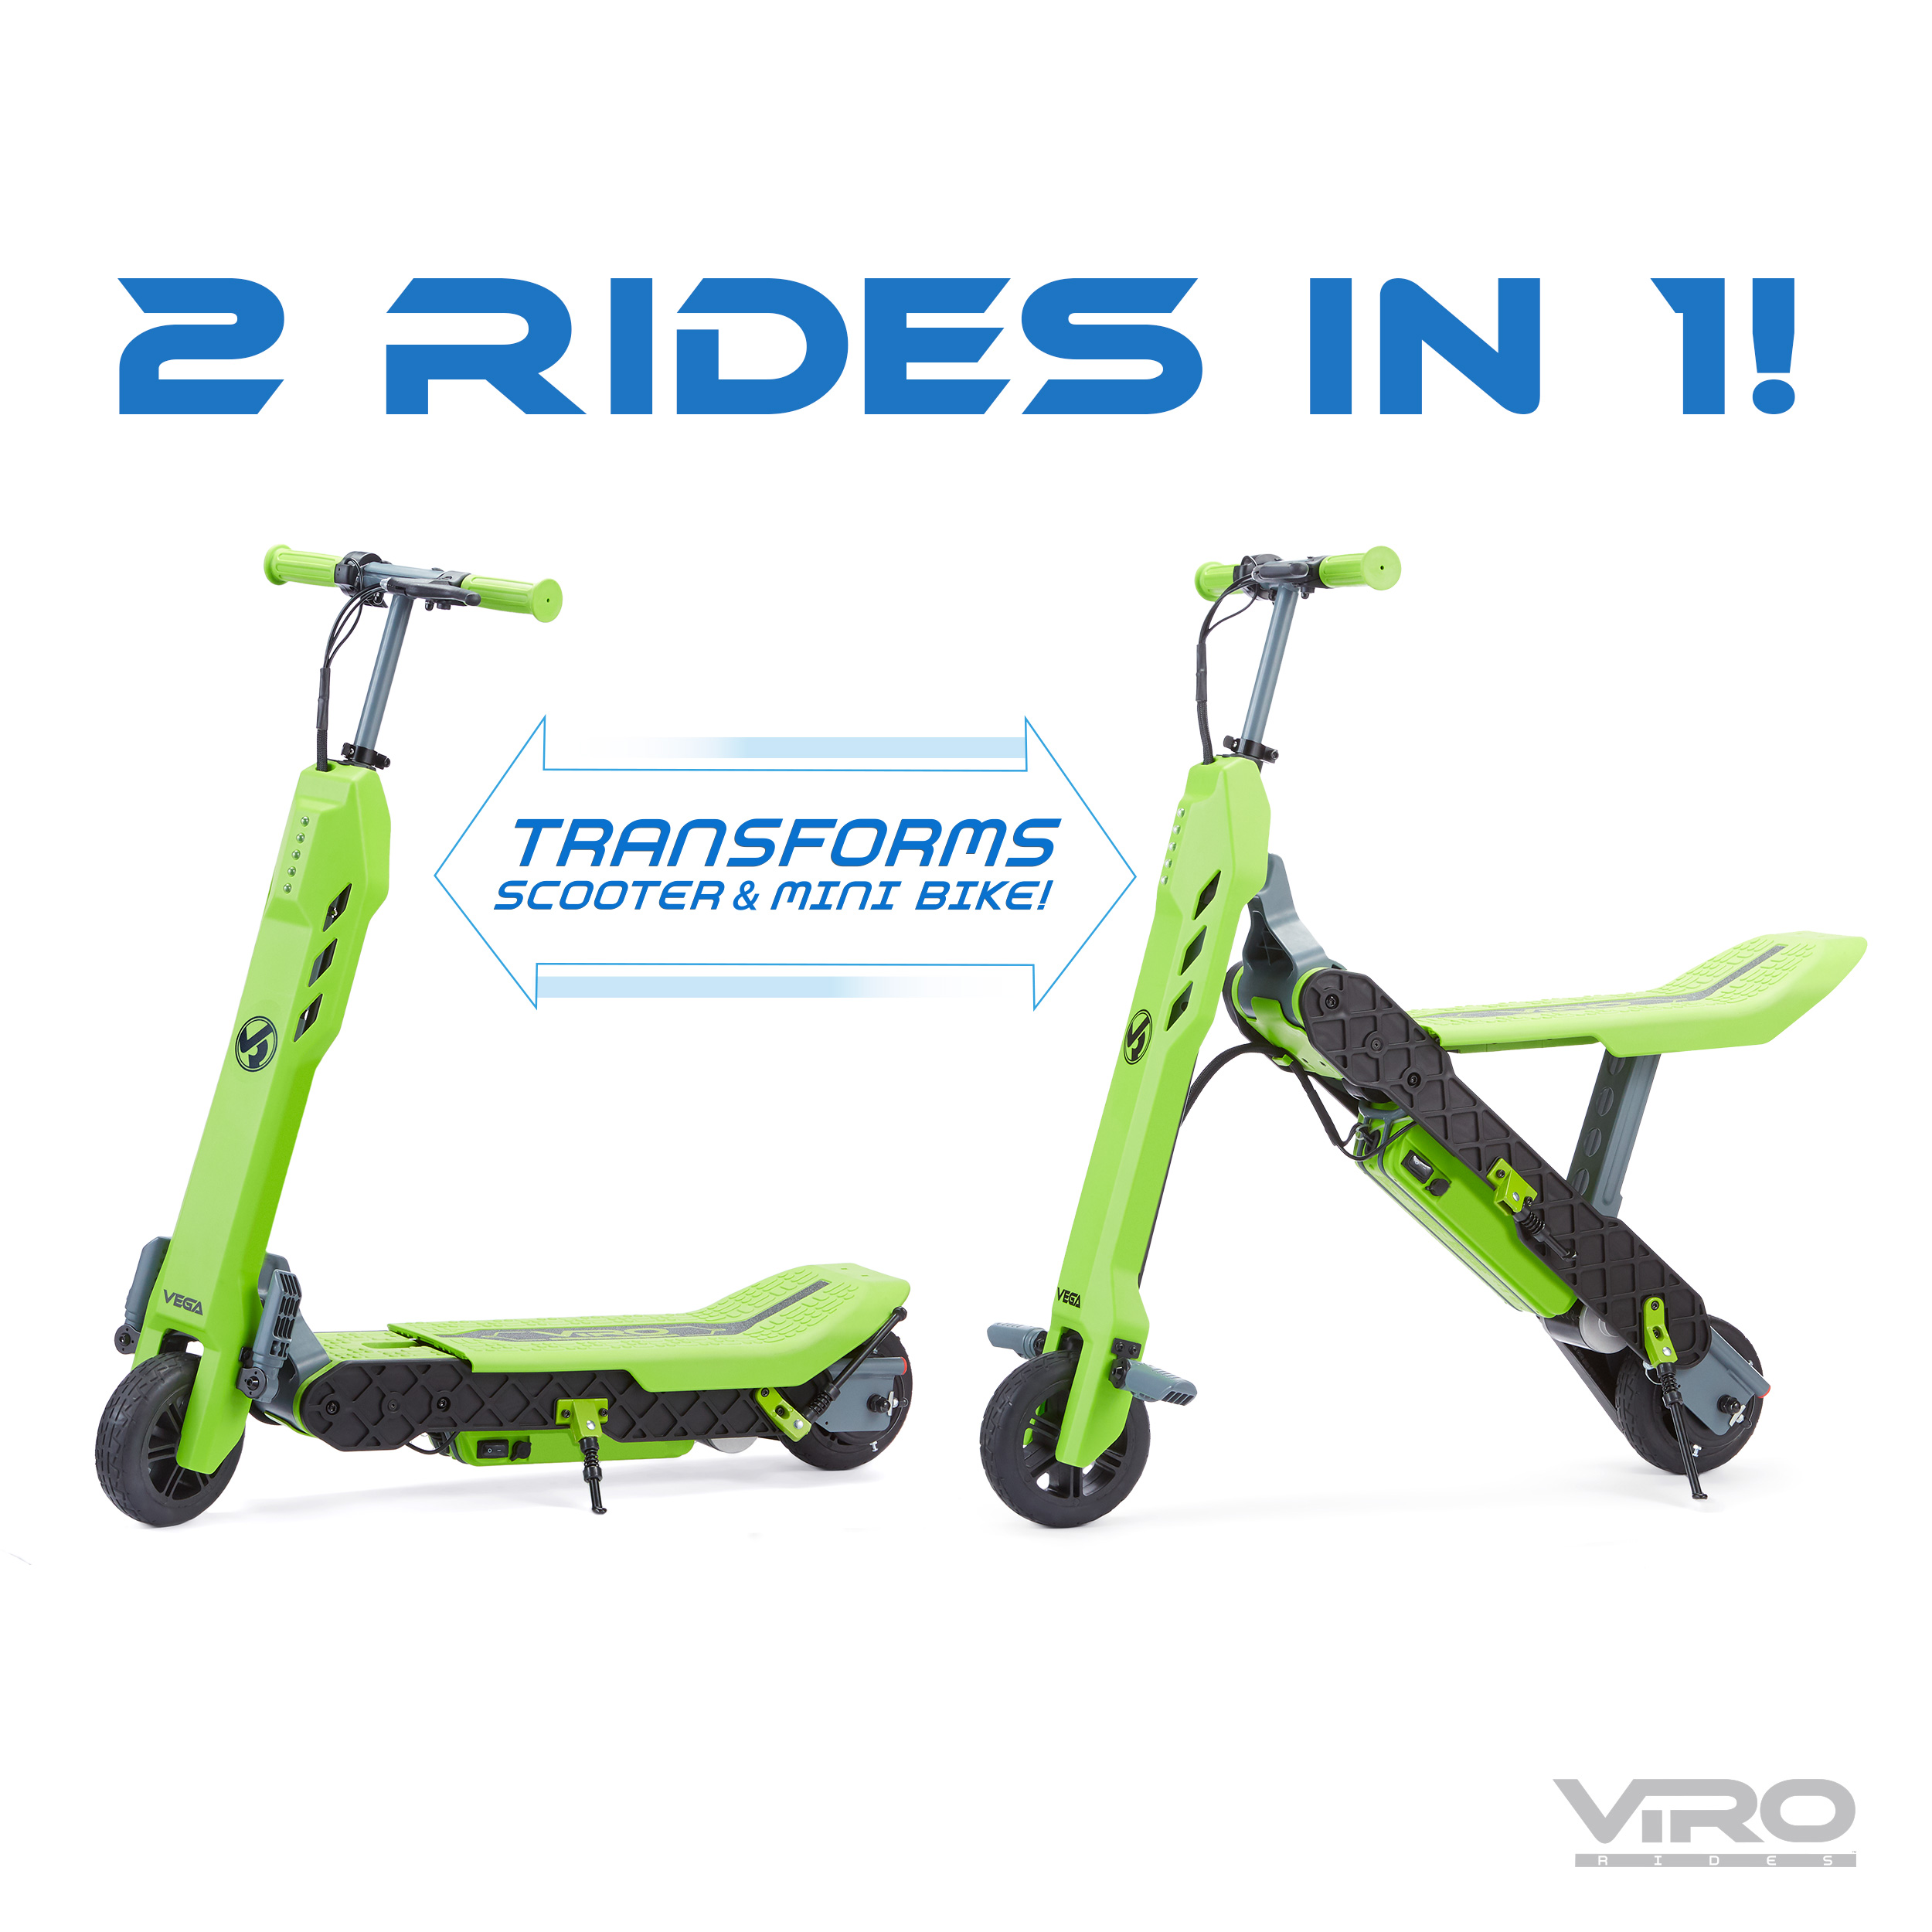 VIRO Rides Vega 2-in-1 Transforming Electric Scooter & Mini Bike, Green - image 2 of 6